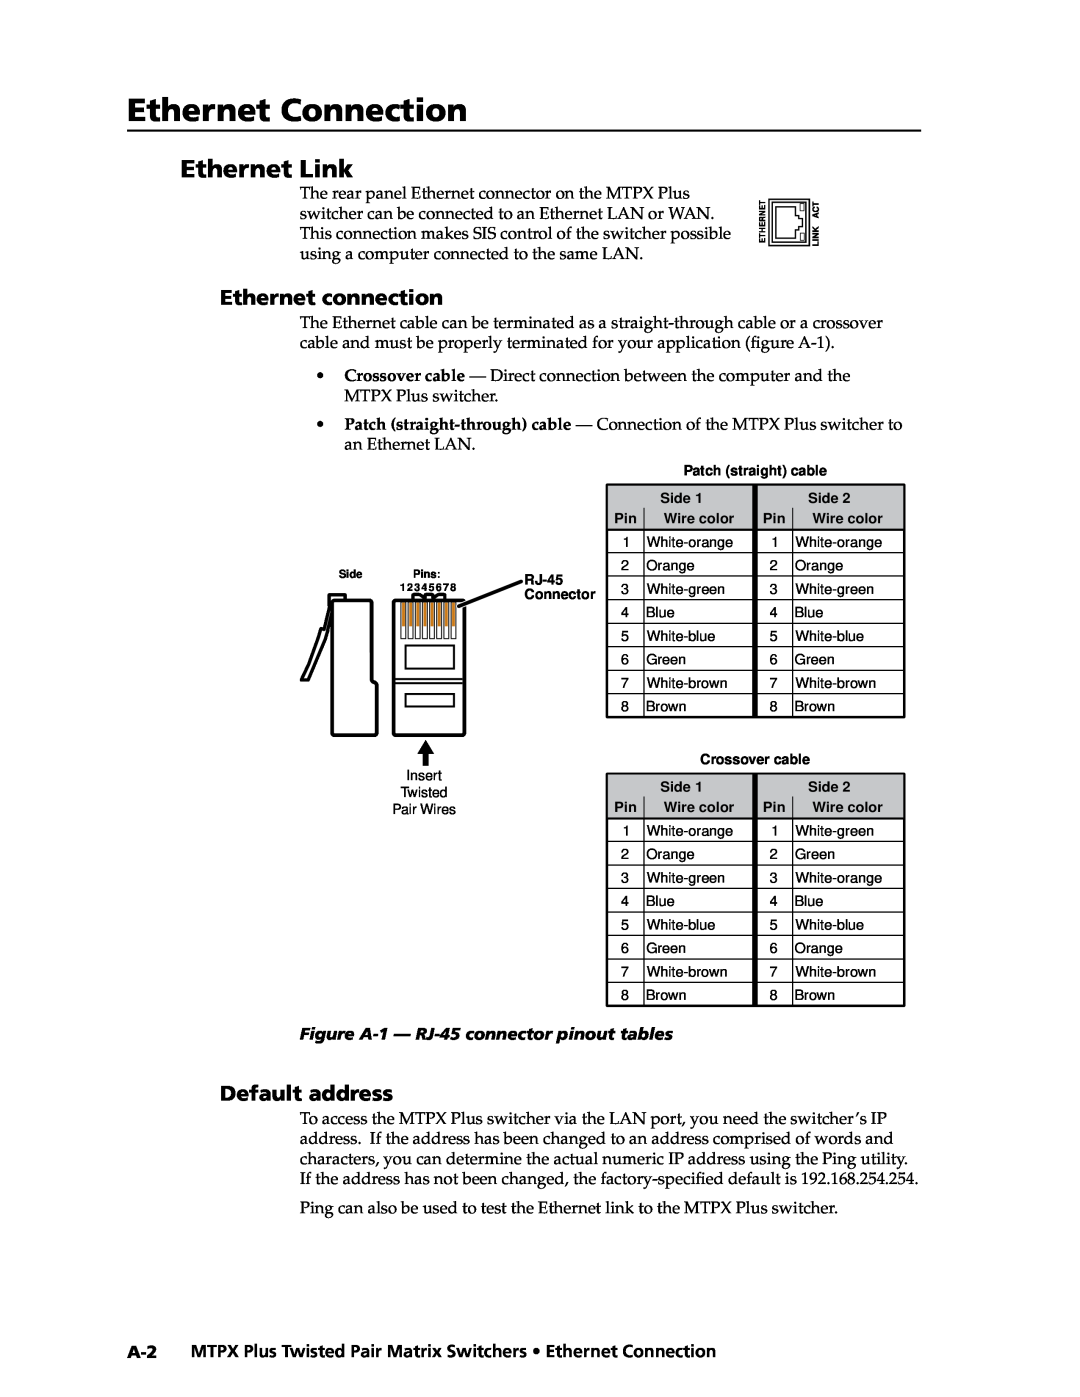 Extron electronic MTPX Plus Series manual Ethernet Connection, Ethernet Link, Default address, Ethernet connection 